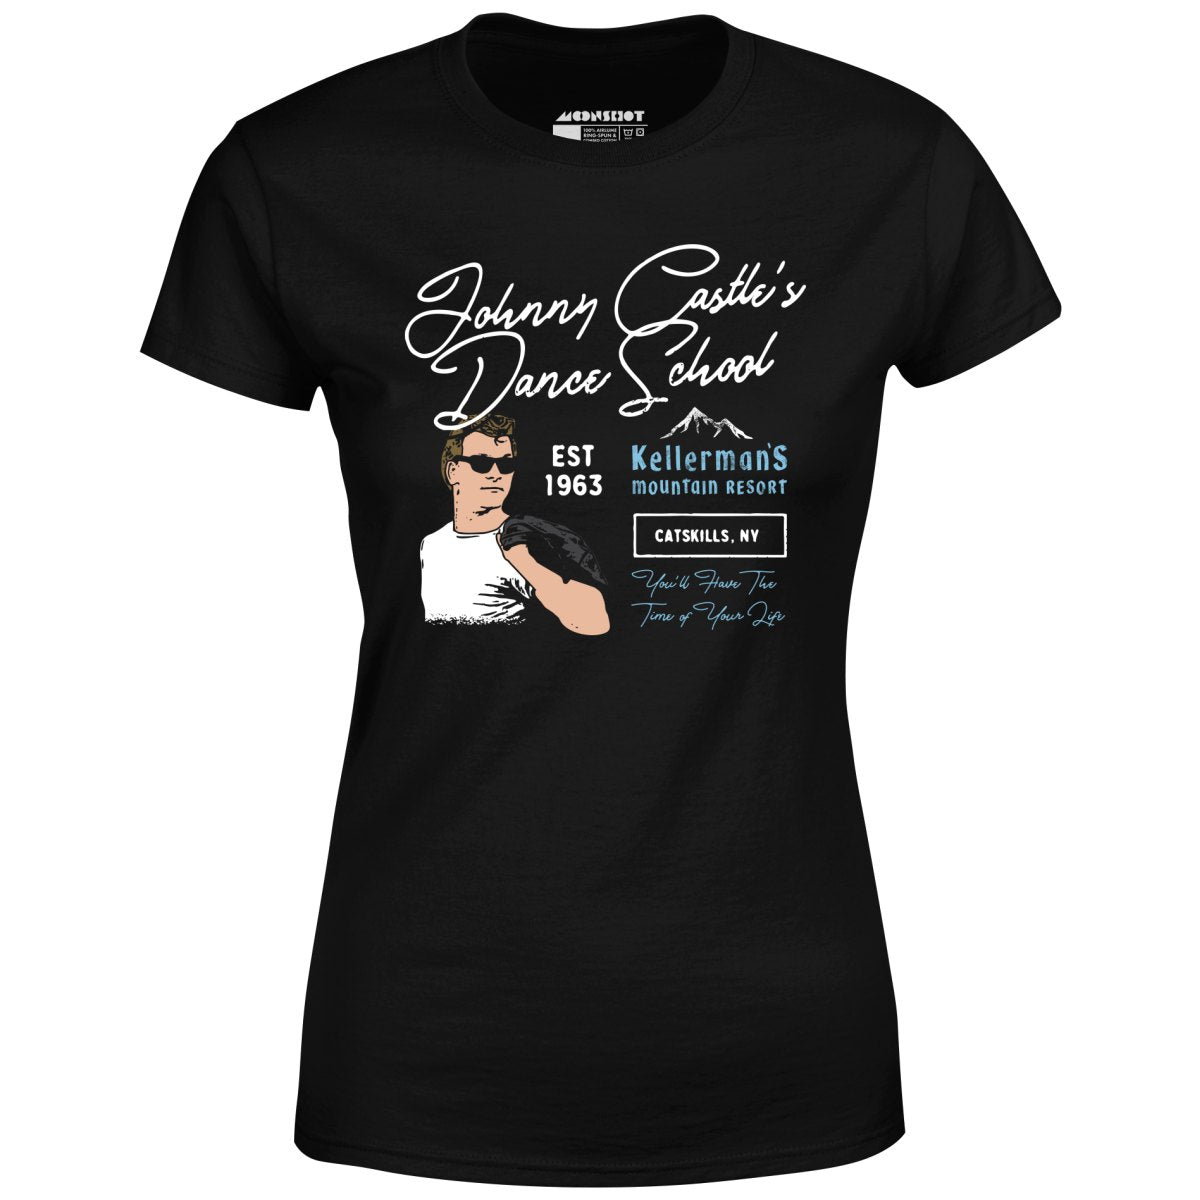 Johnny Castle's Dance School - Women's T-Shirt